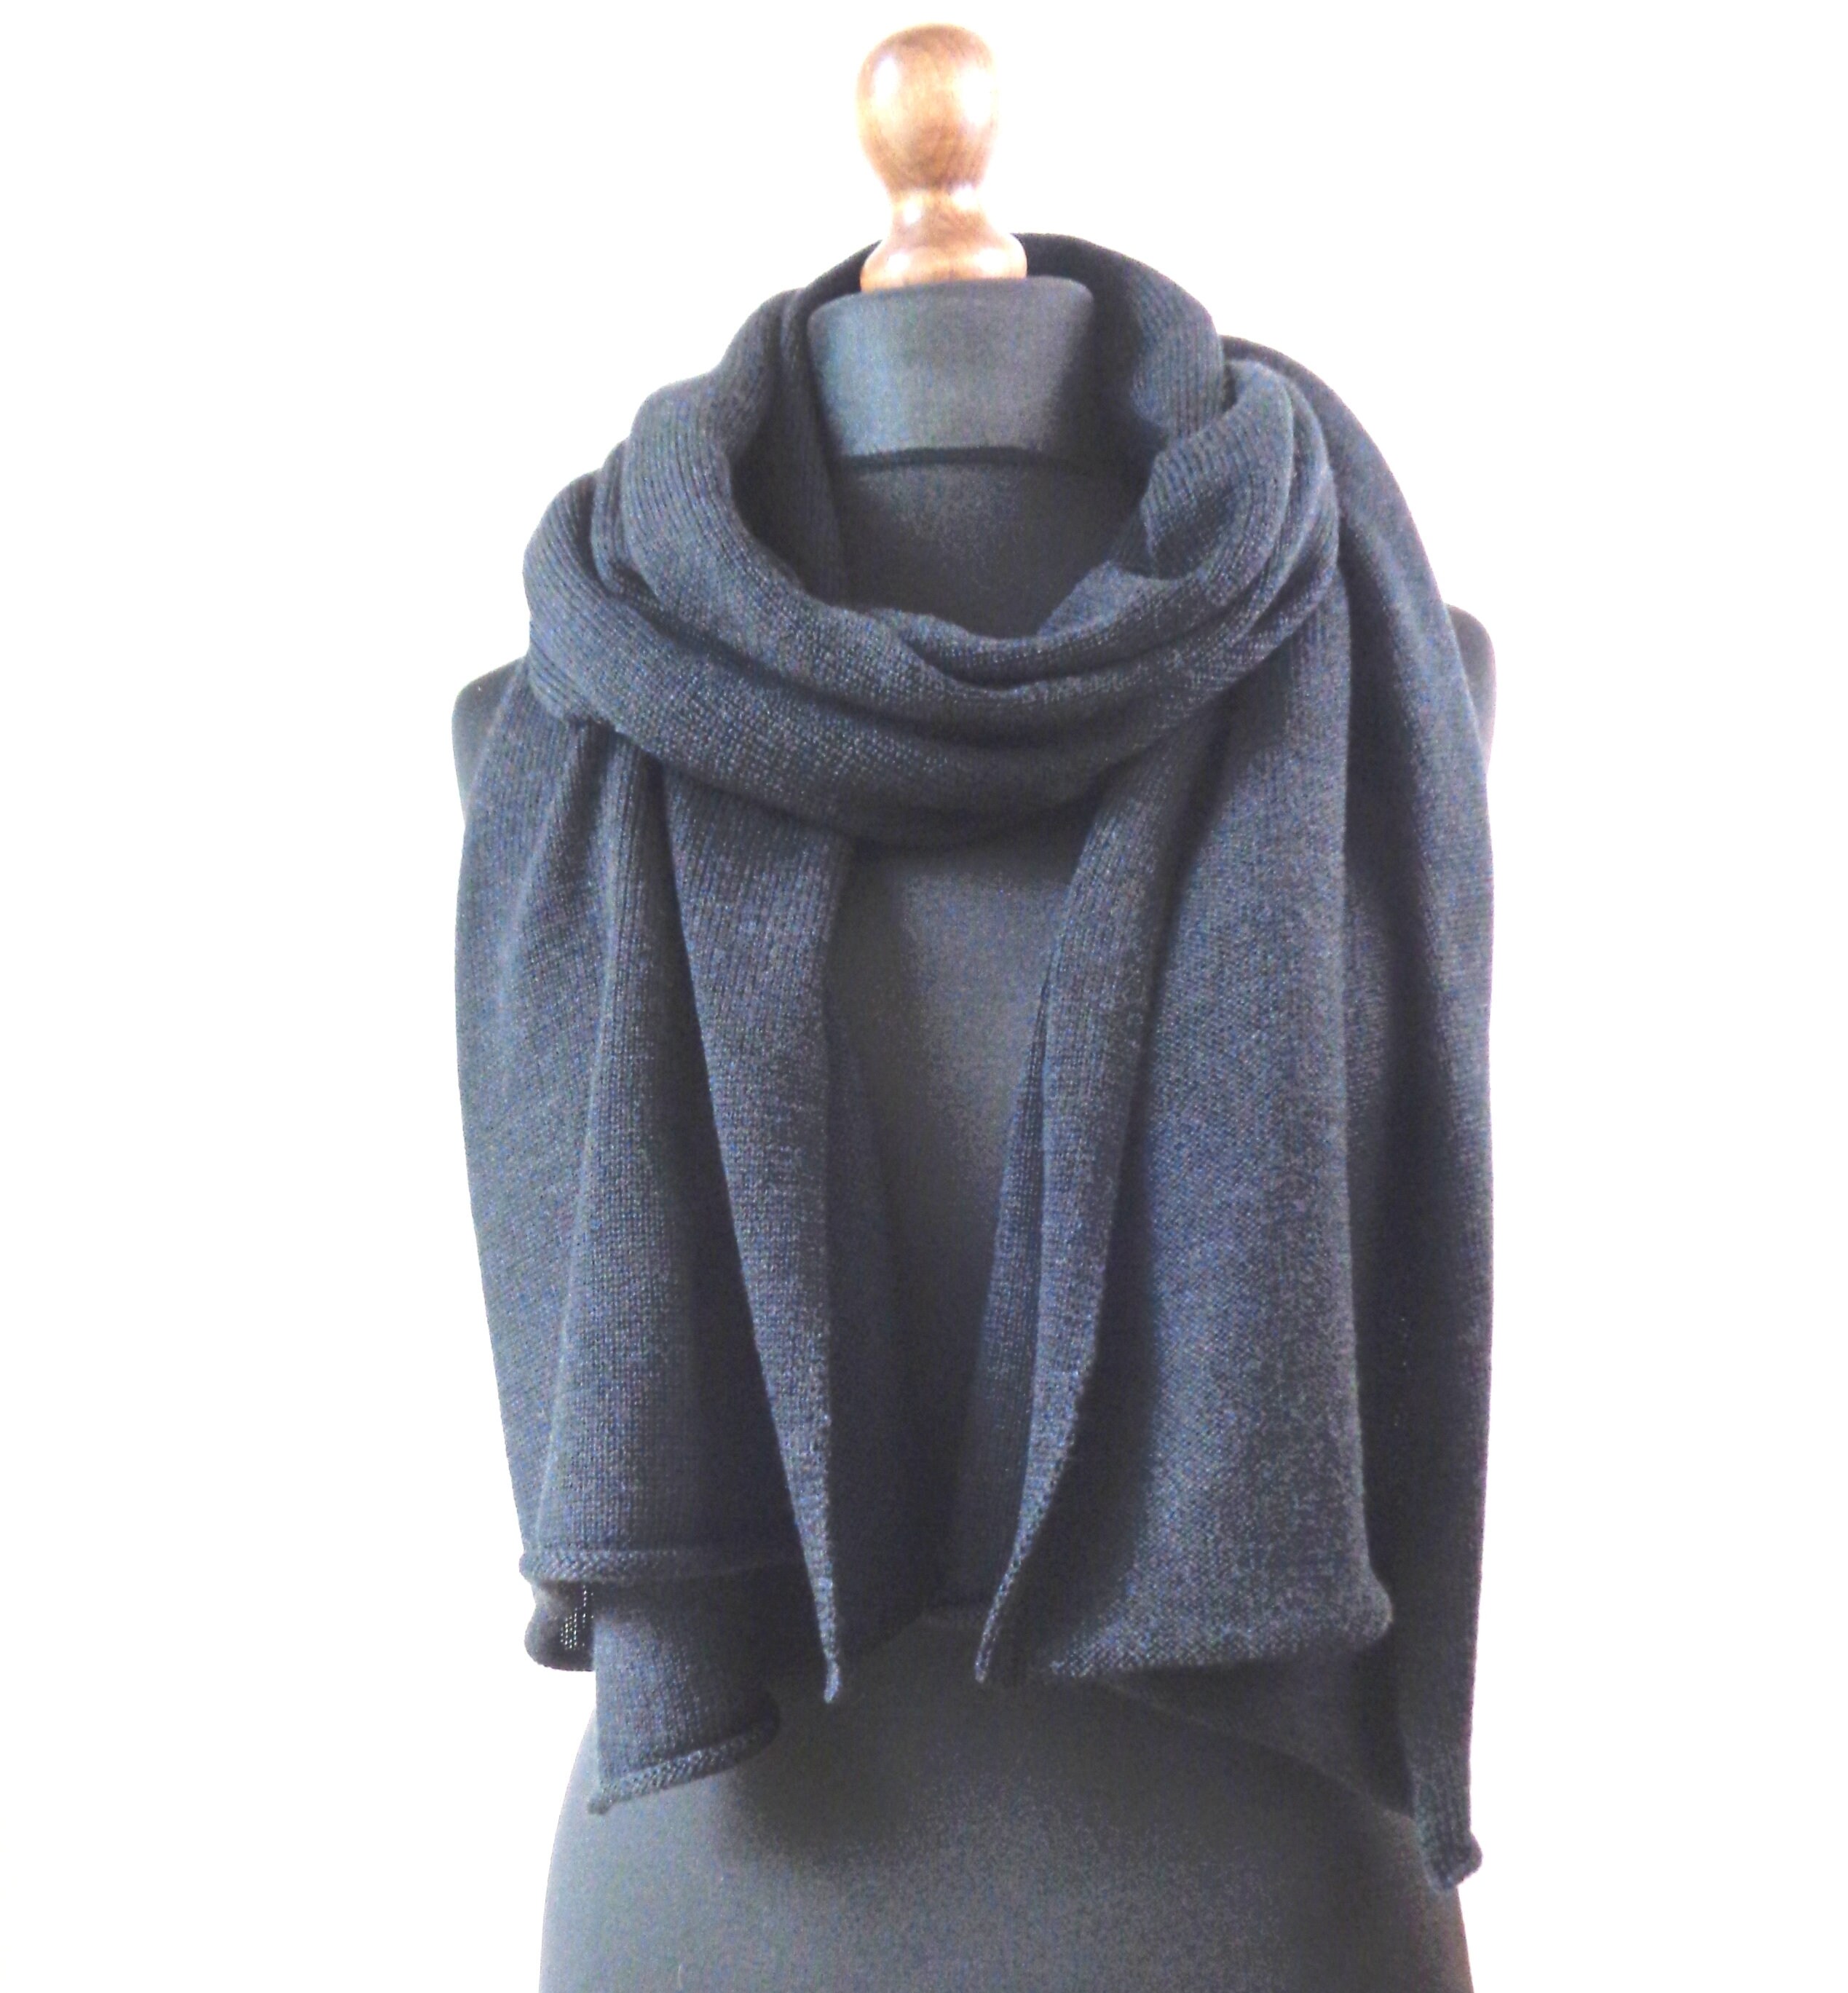 Cashmere scarf Wool very dark grey scarf Cashmere merino scarf | Etsy